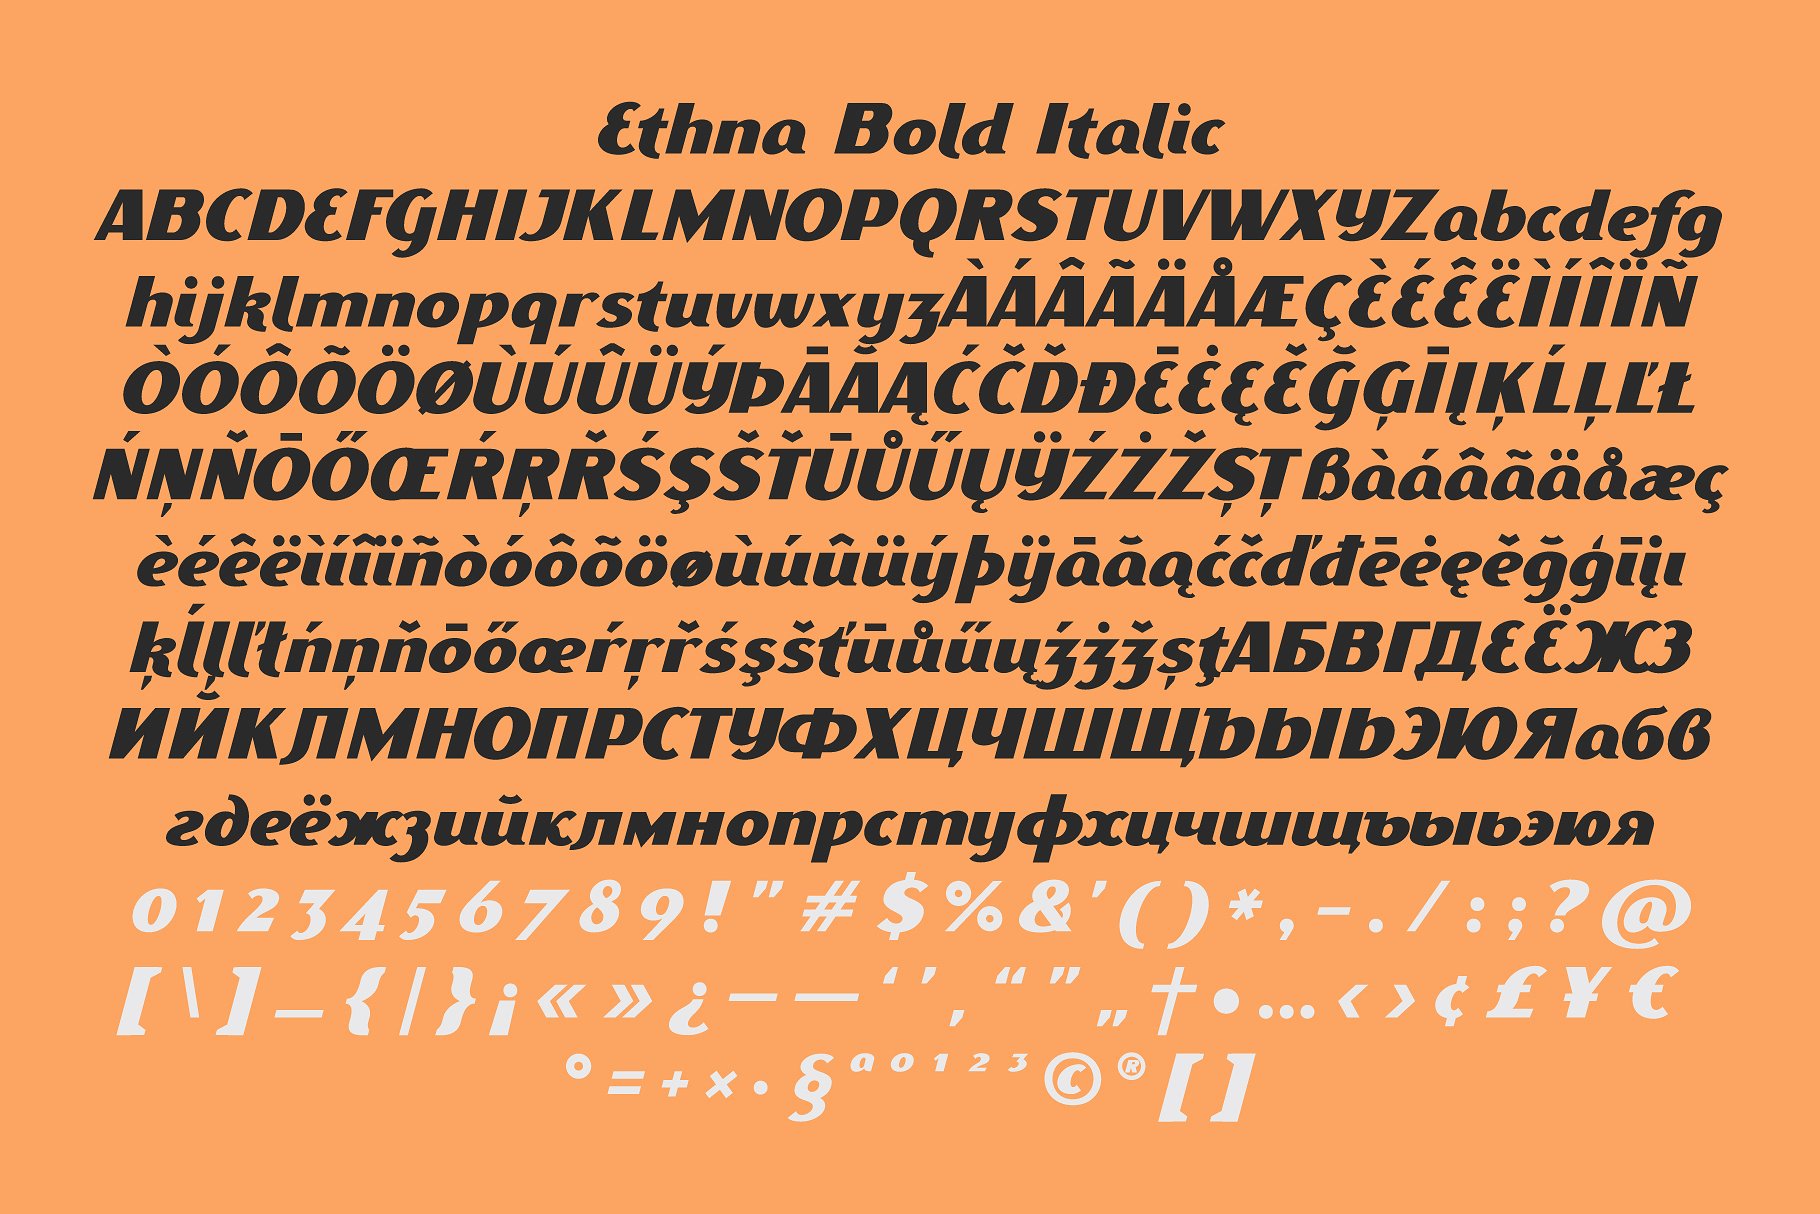 Ethna现代复古倾斜字体插图2